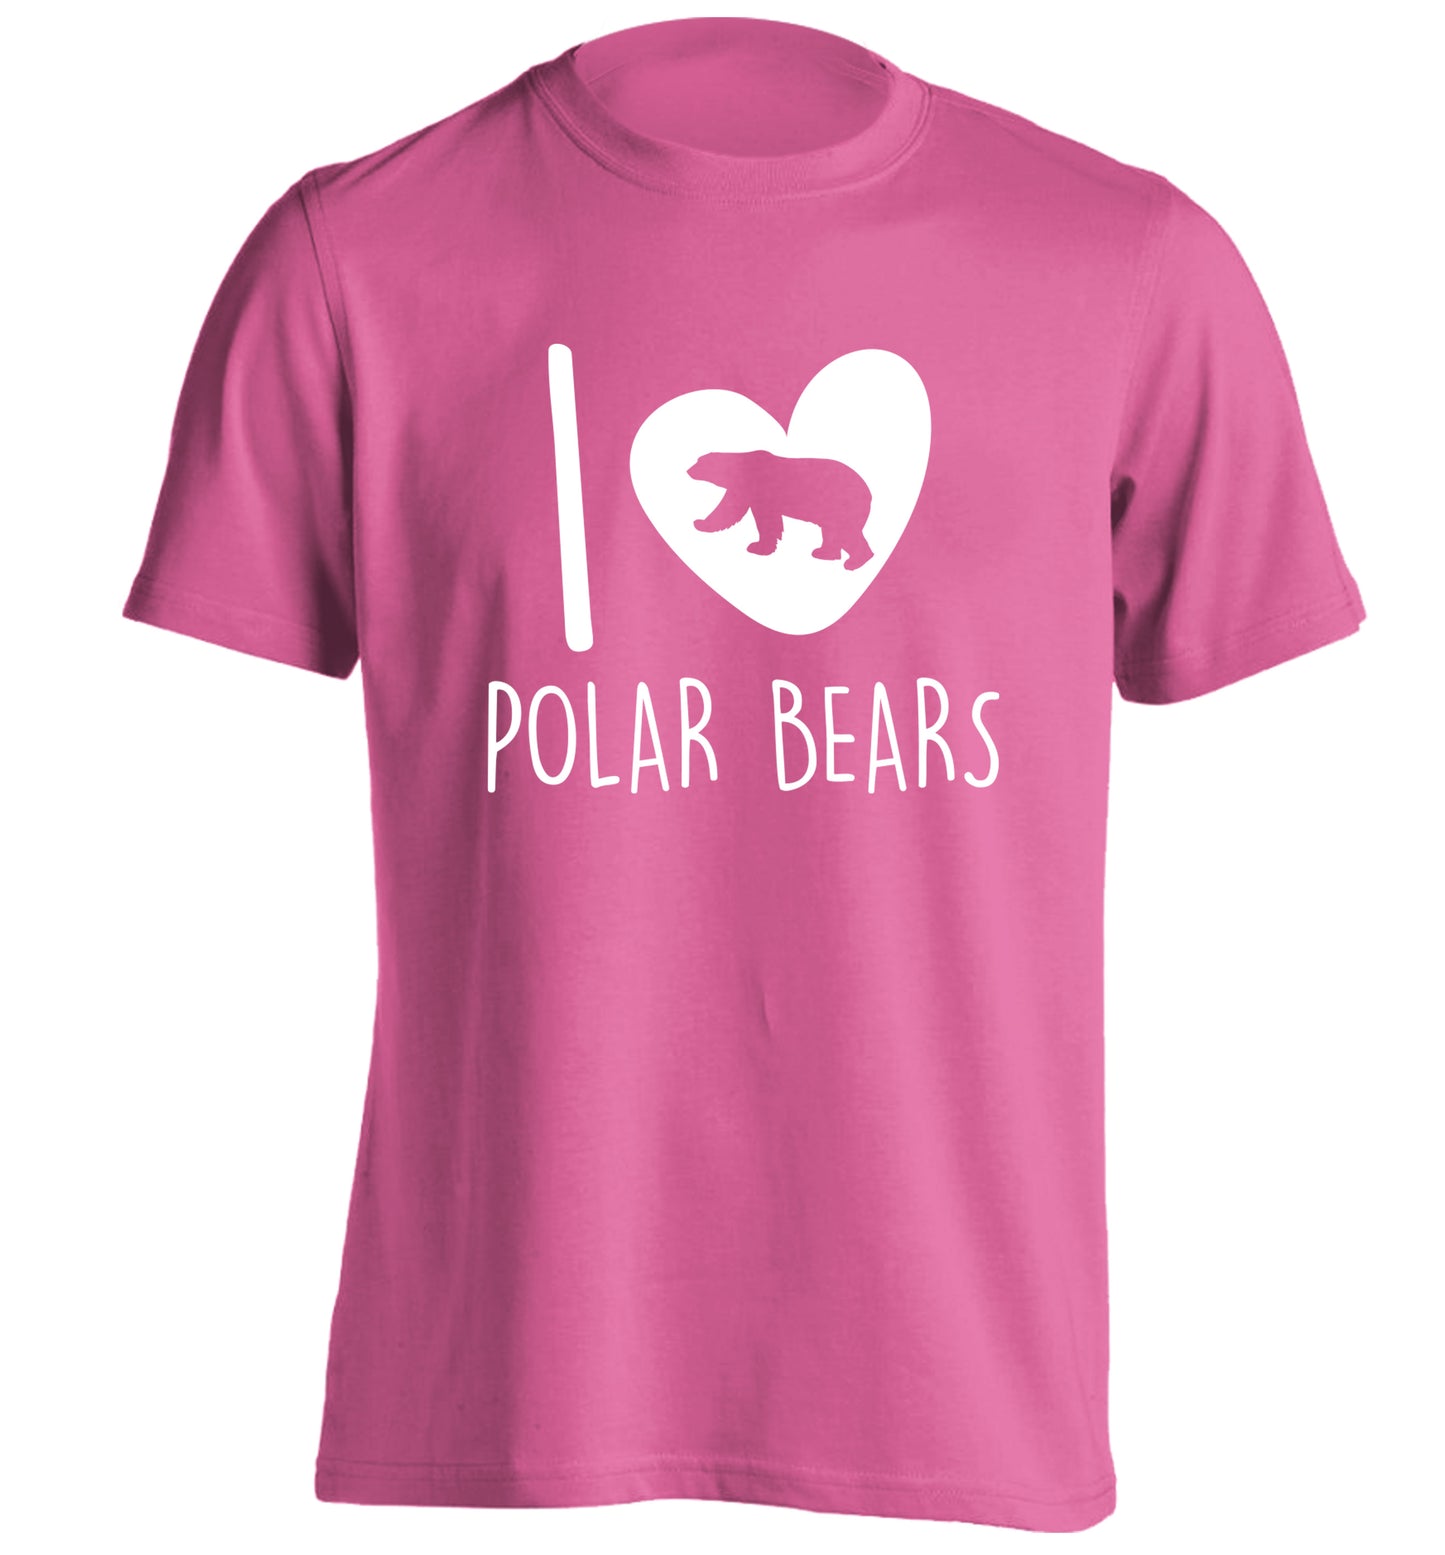 I Love Polar Bears adults unisex pink Tshirt 2XL